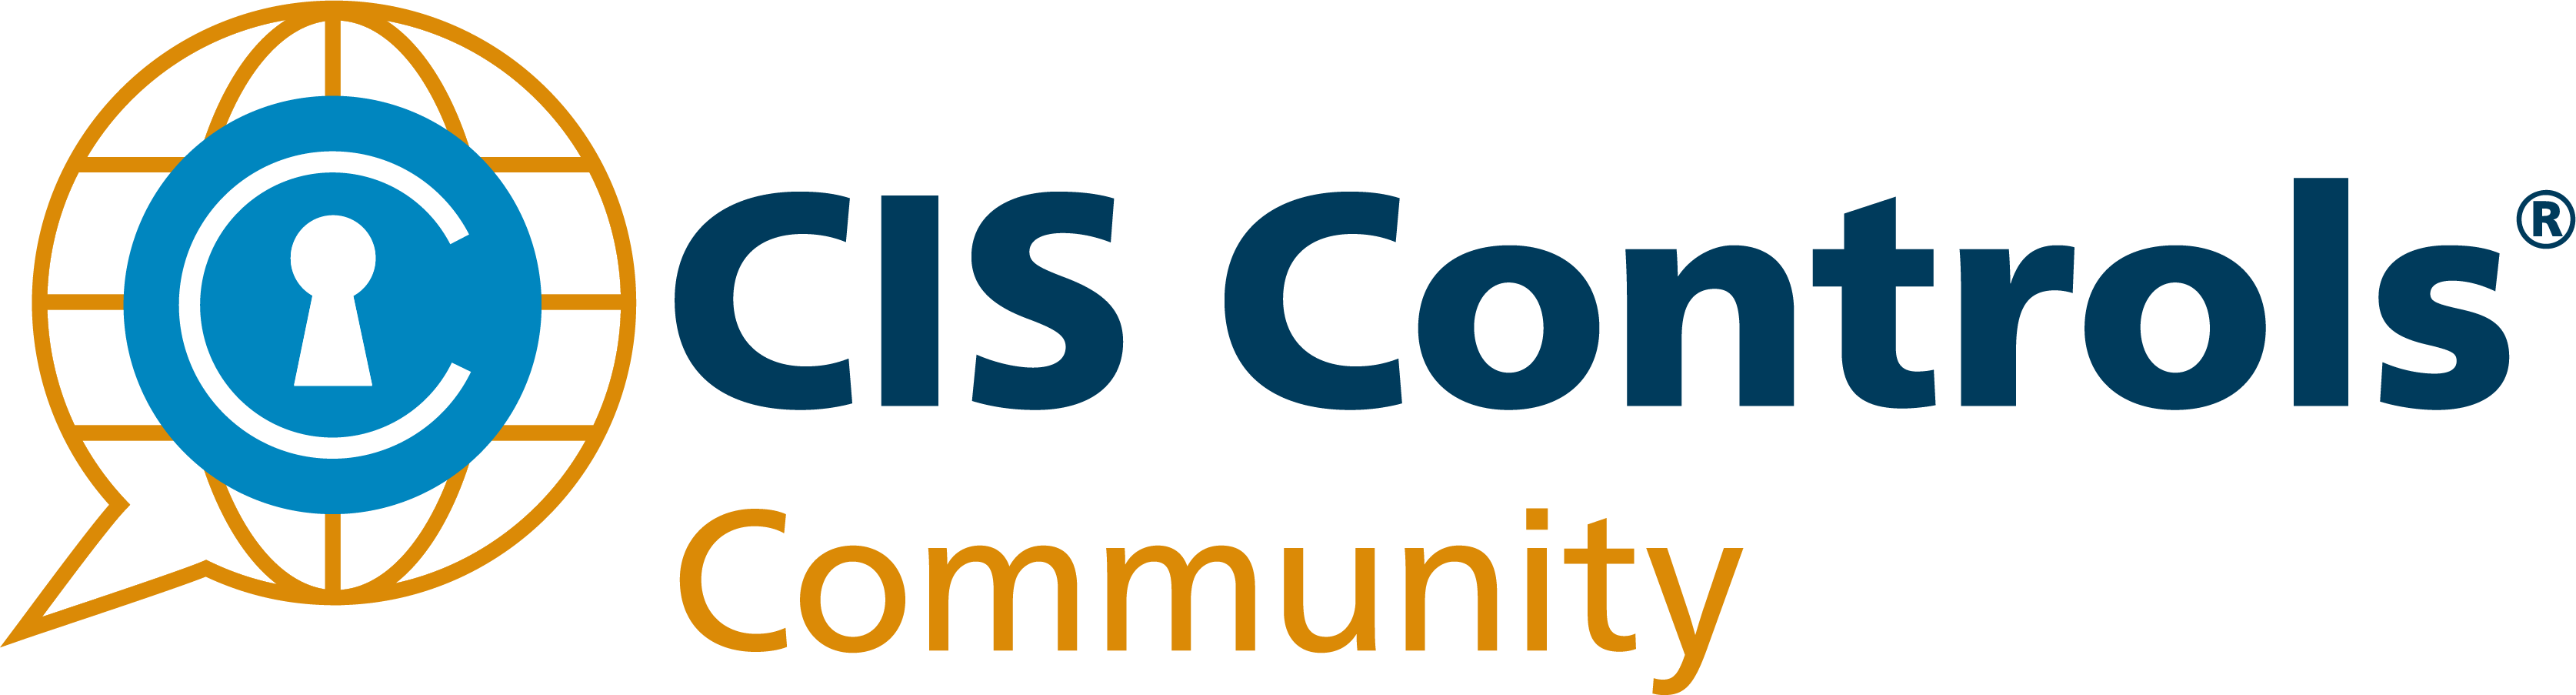 CIS-Controls_Community